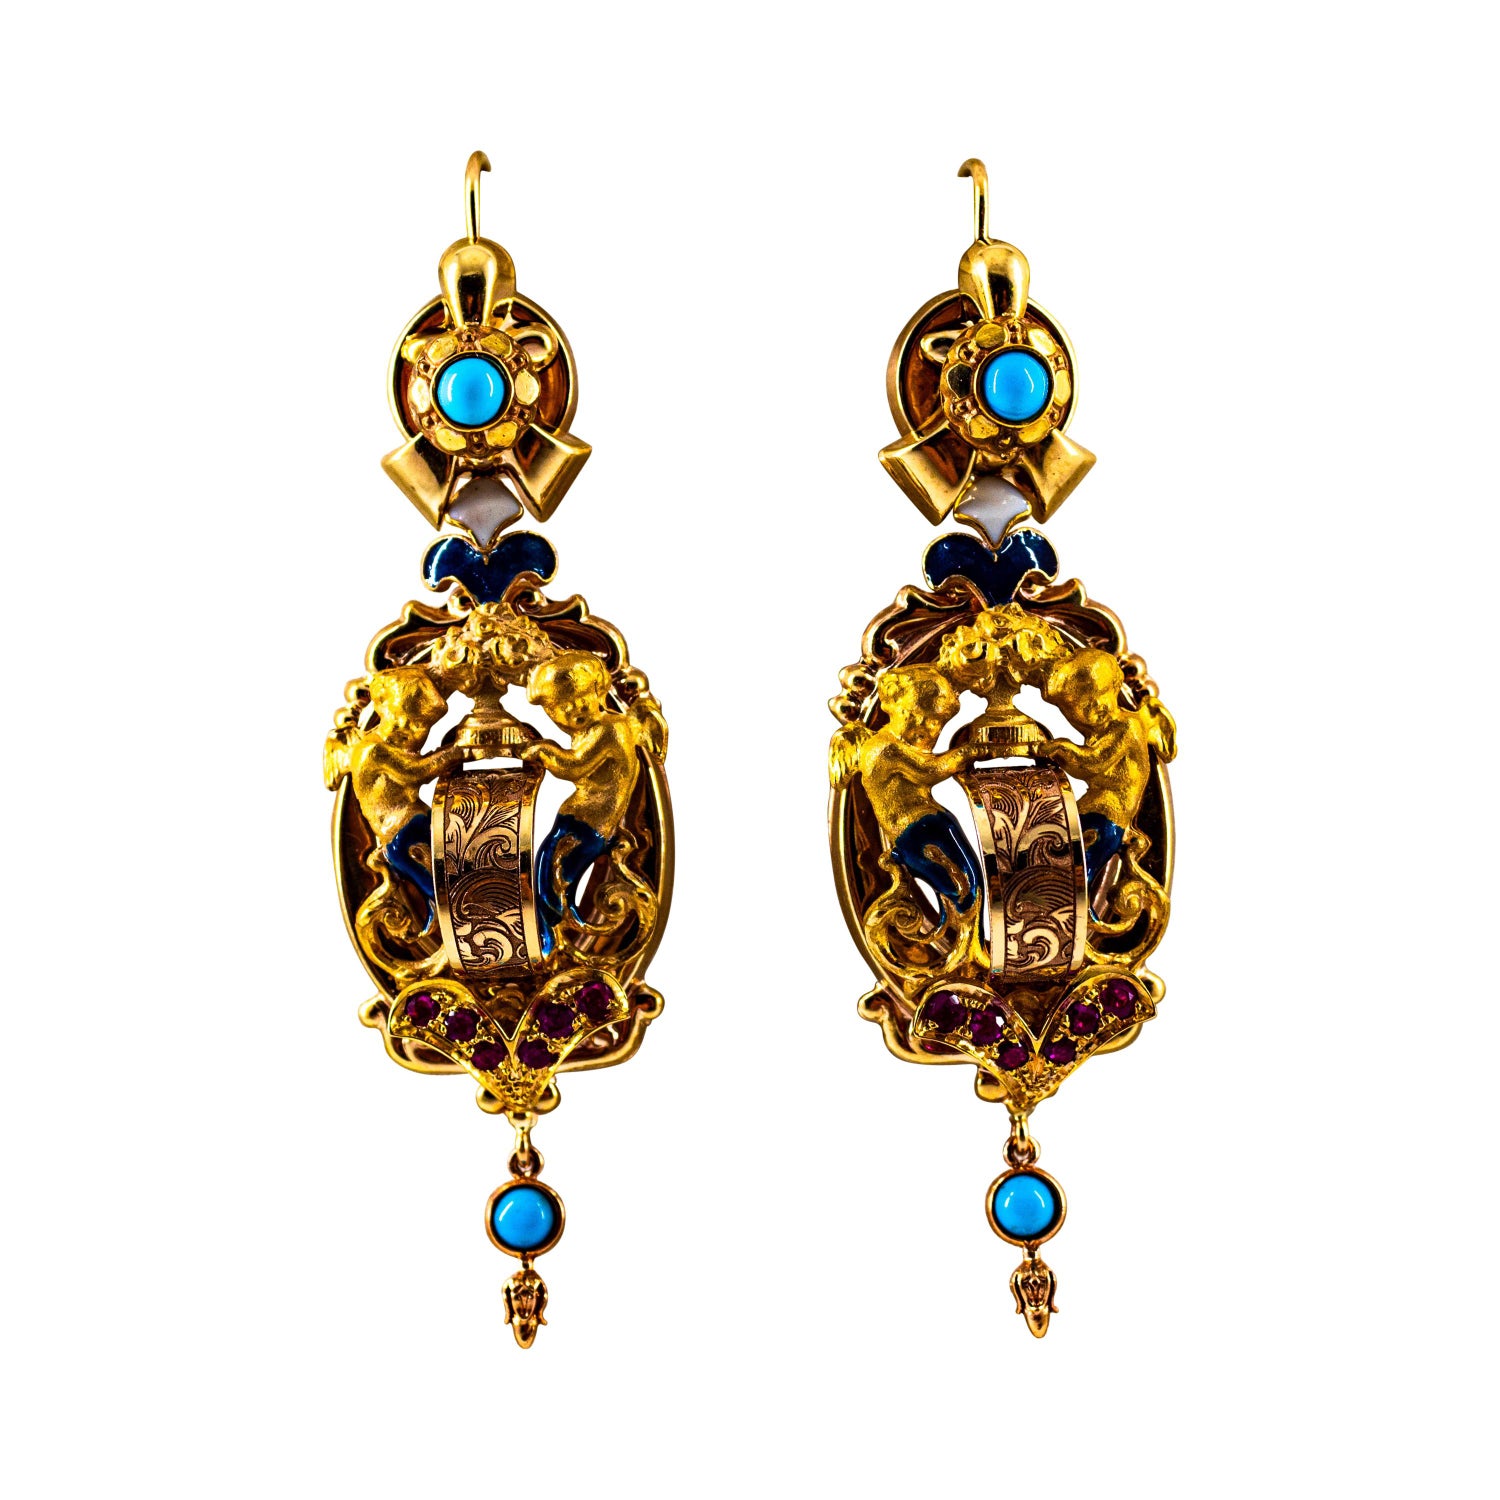 https://a.1stdibscdn.com/art-deco-style-060-carat-ruby-turquoise-enamel-yellow-gold-lever-back-earrings-for-sale/1121189/j_123311321621618317354/12331132_master.jpg?width=1500